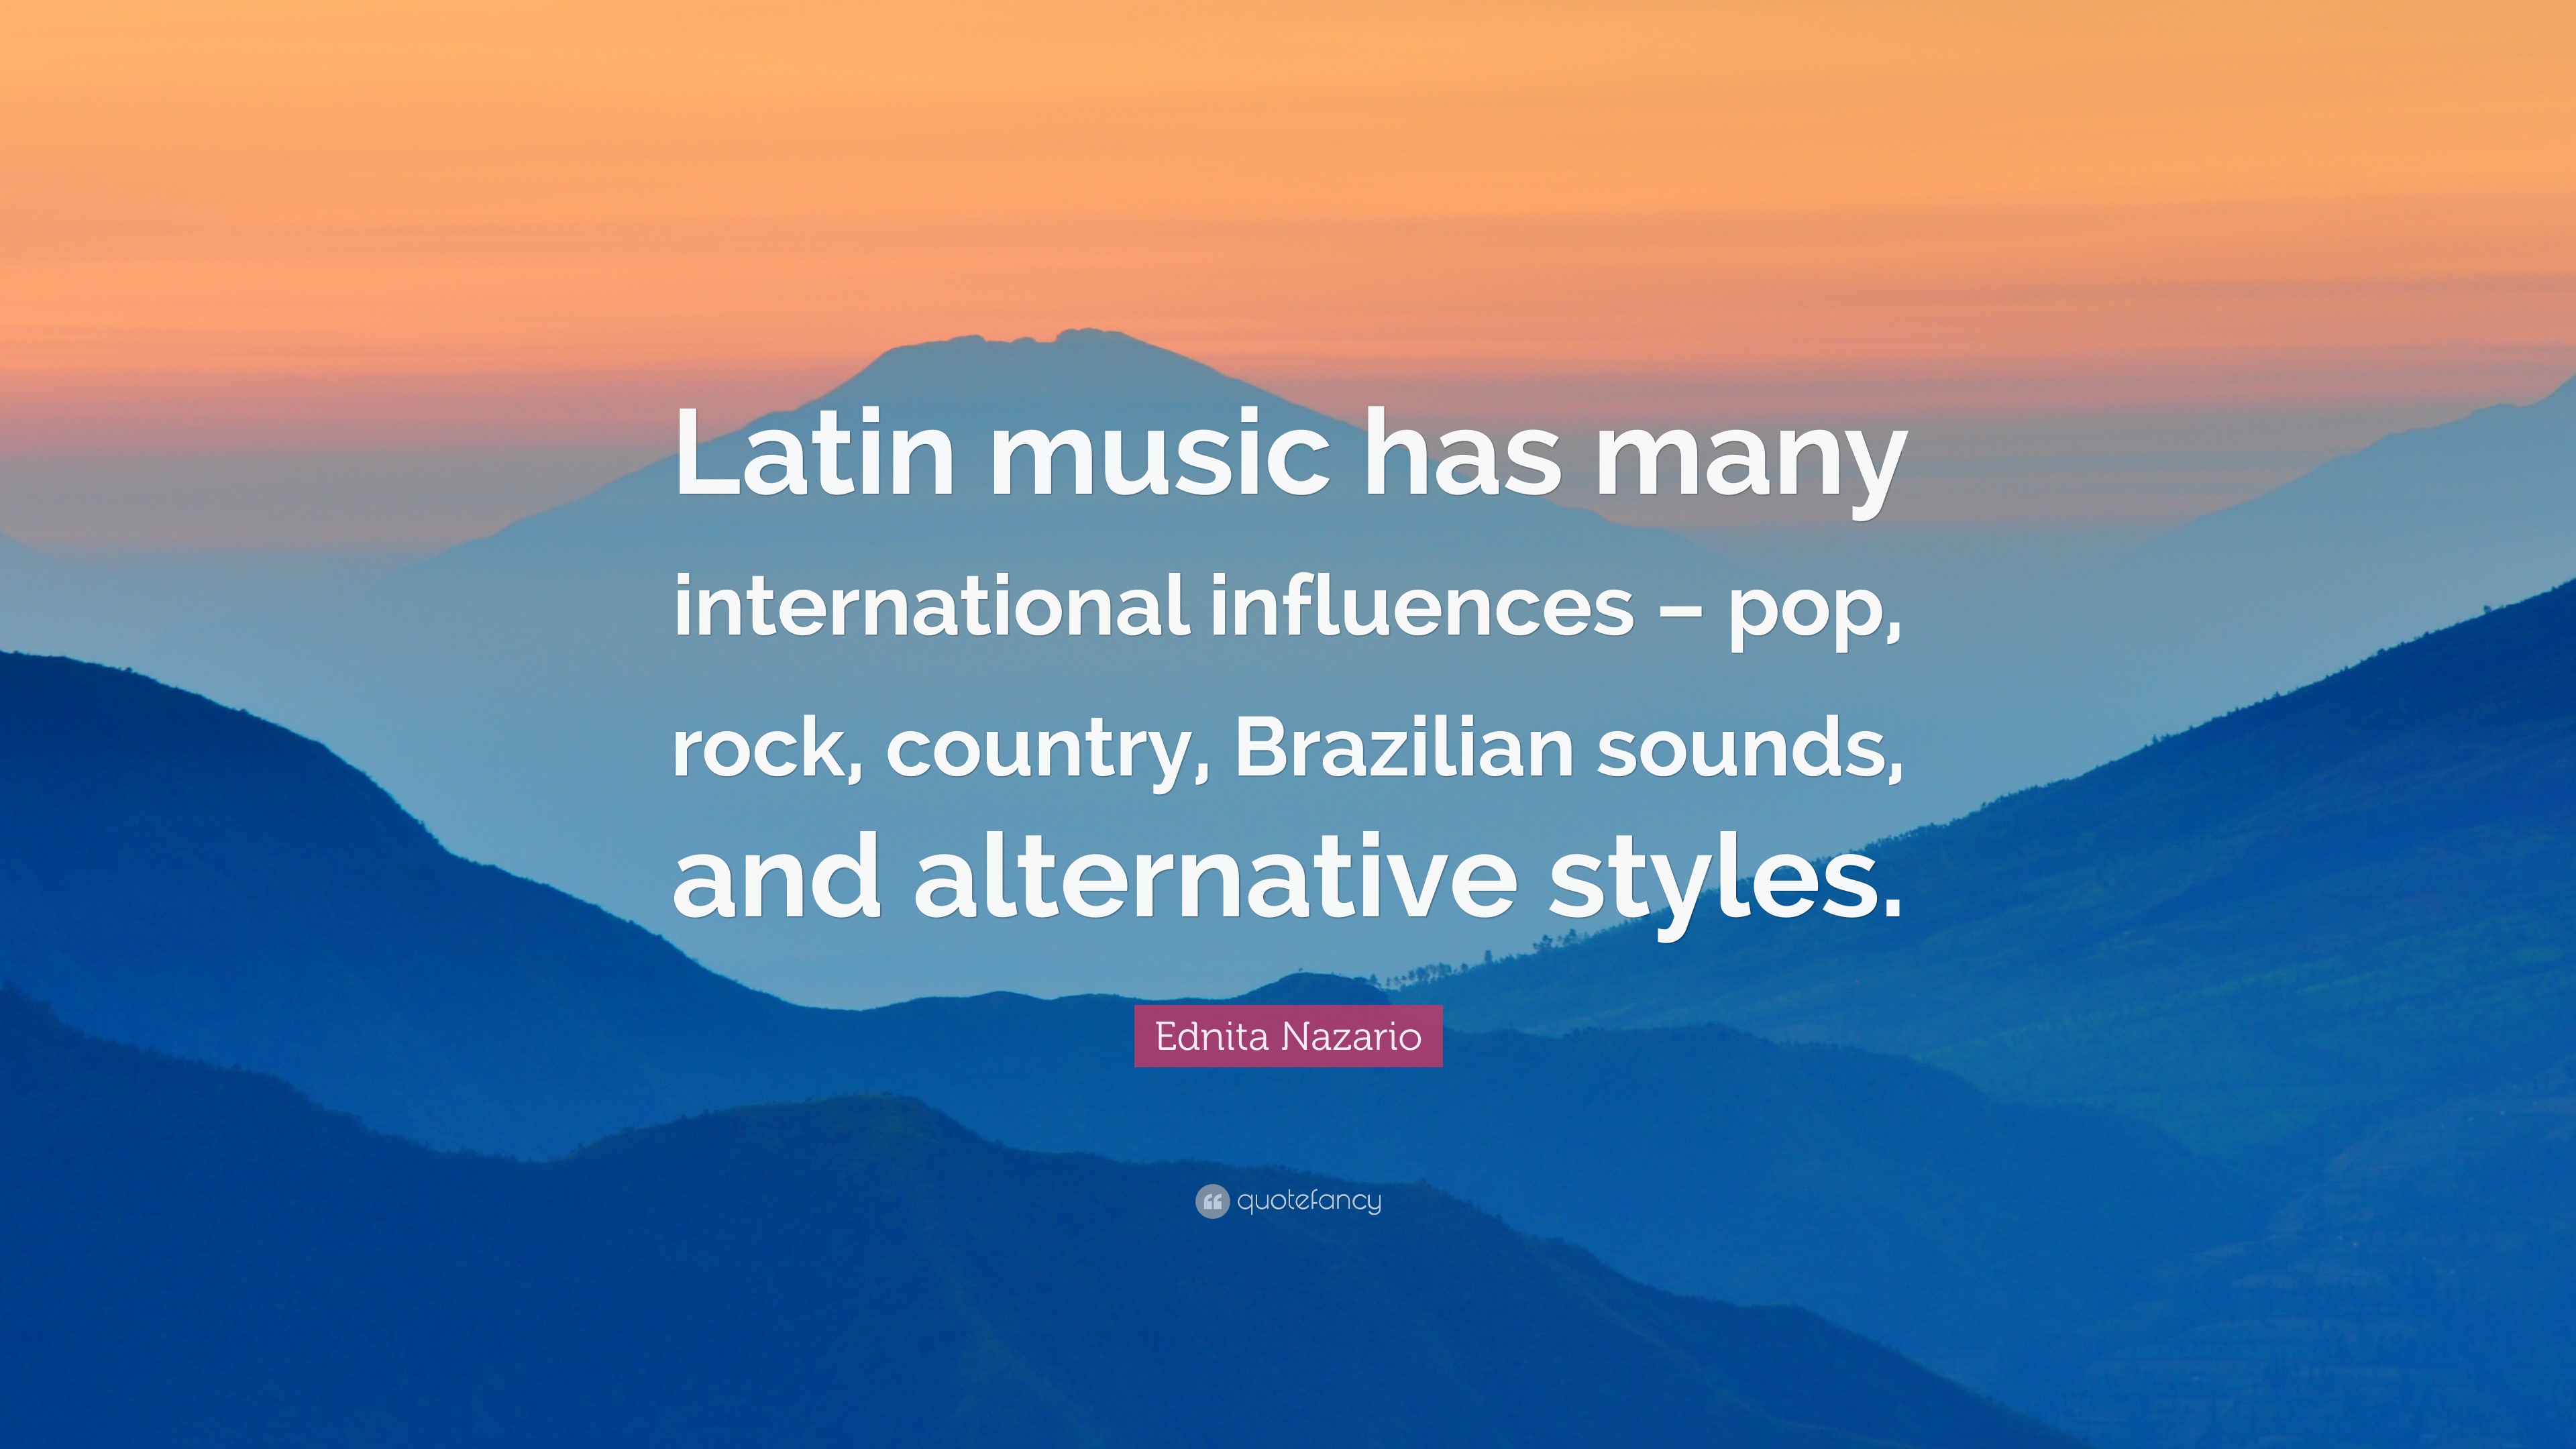 Ednita Nazario Quote: “Latin music has many international influences